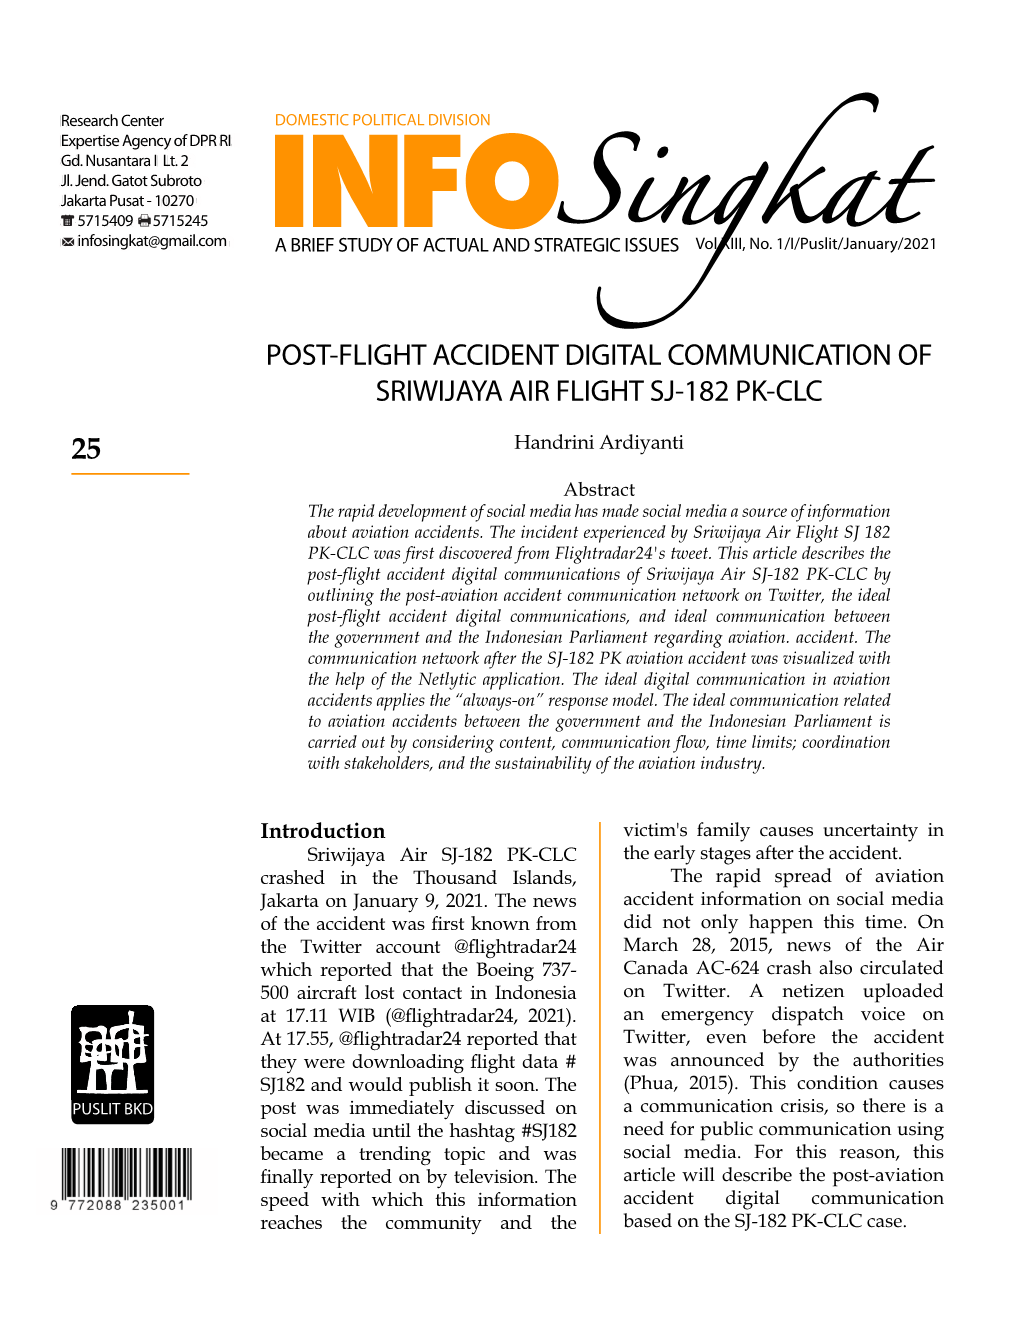 Post-Flight Accident Digital Communication of Sriwijaya Air Flight Sj-182 Pk-Clc